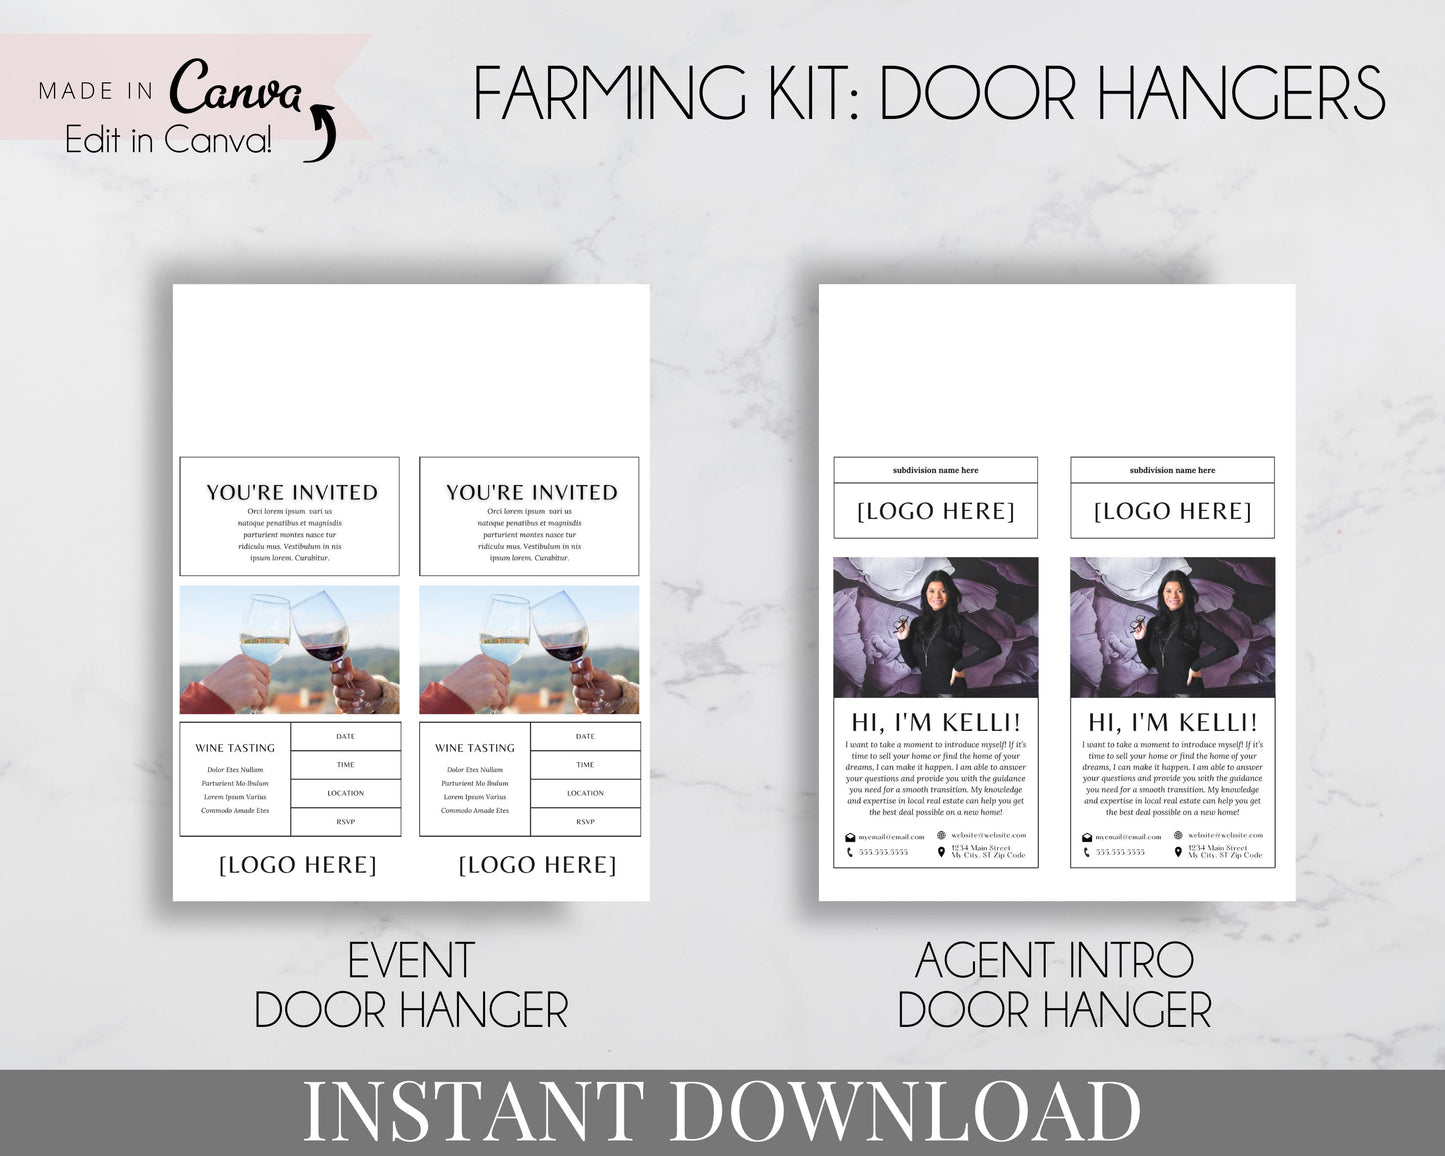 Real Estate Farming Kit Marketing for Realtors, Agents - Instant Download - Farming Kit Door Hanger Templates - Event Door Hanger - Agent Intro Door Hanger